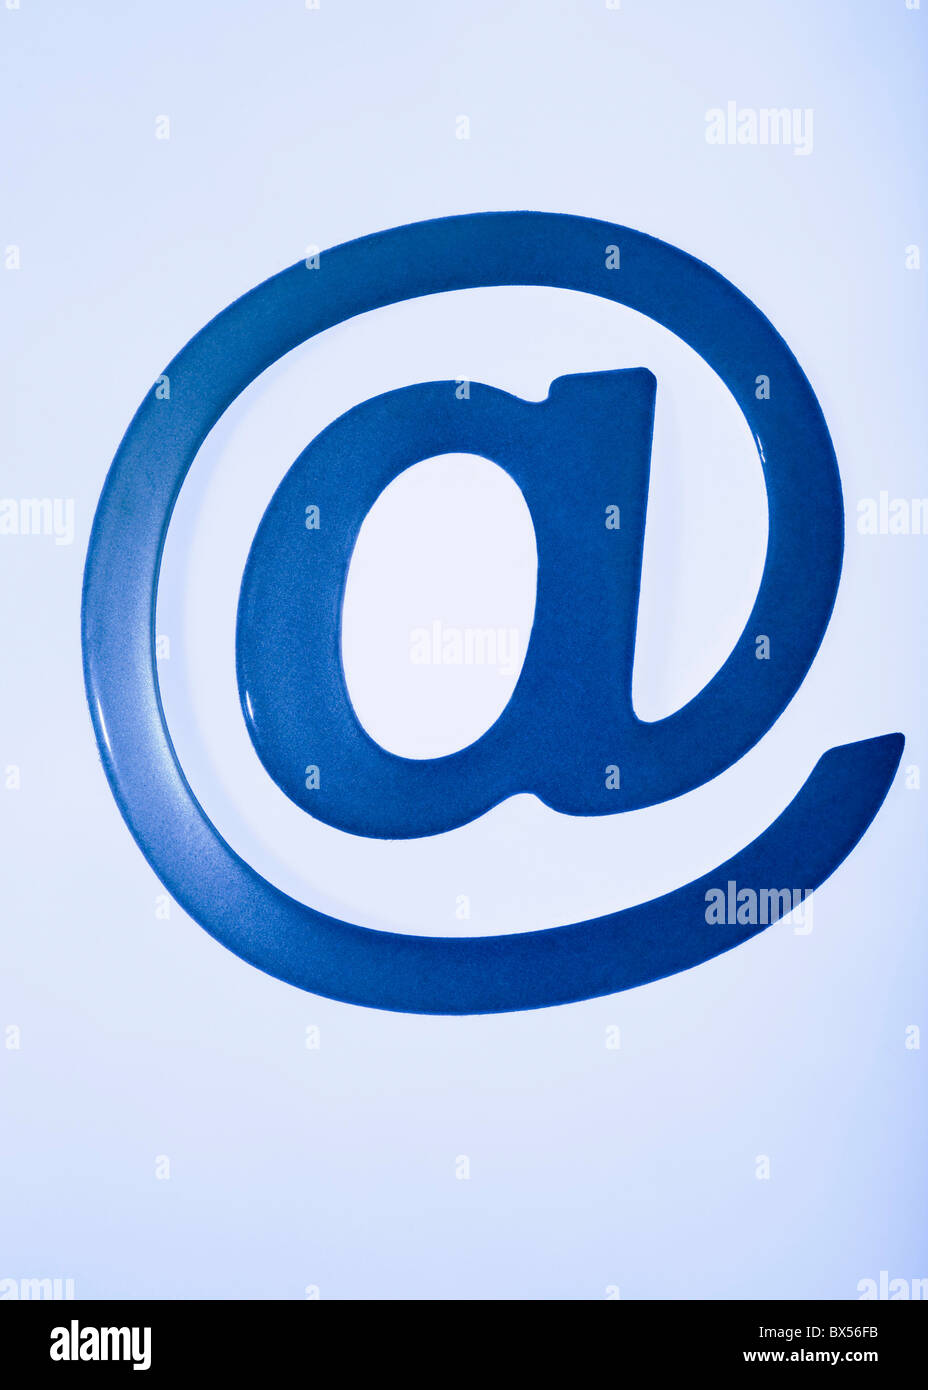 Email symbol Stock Photo